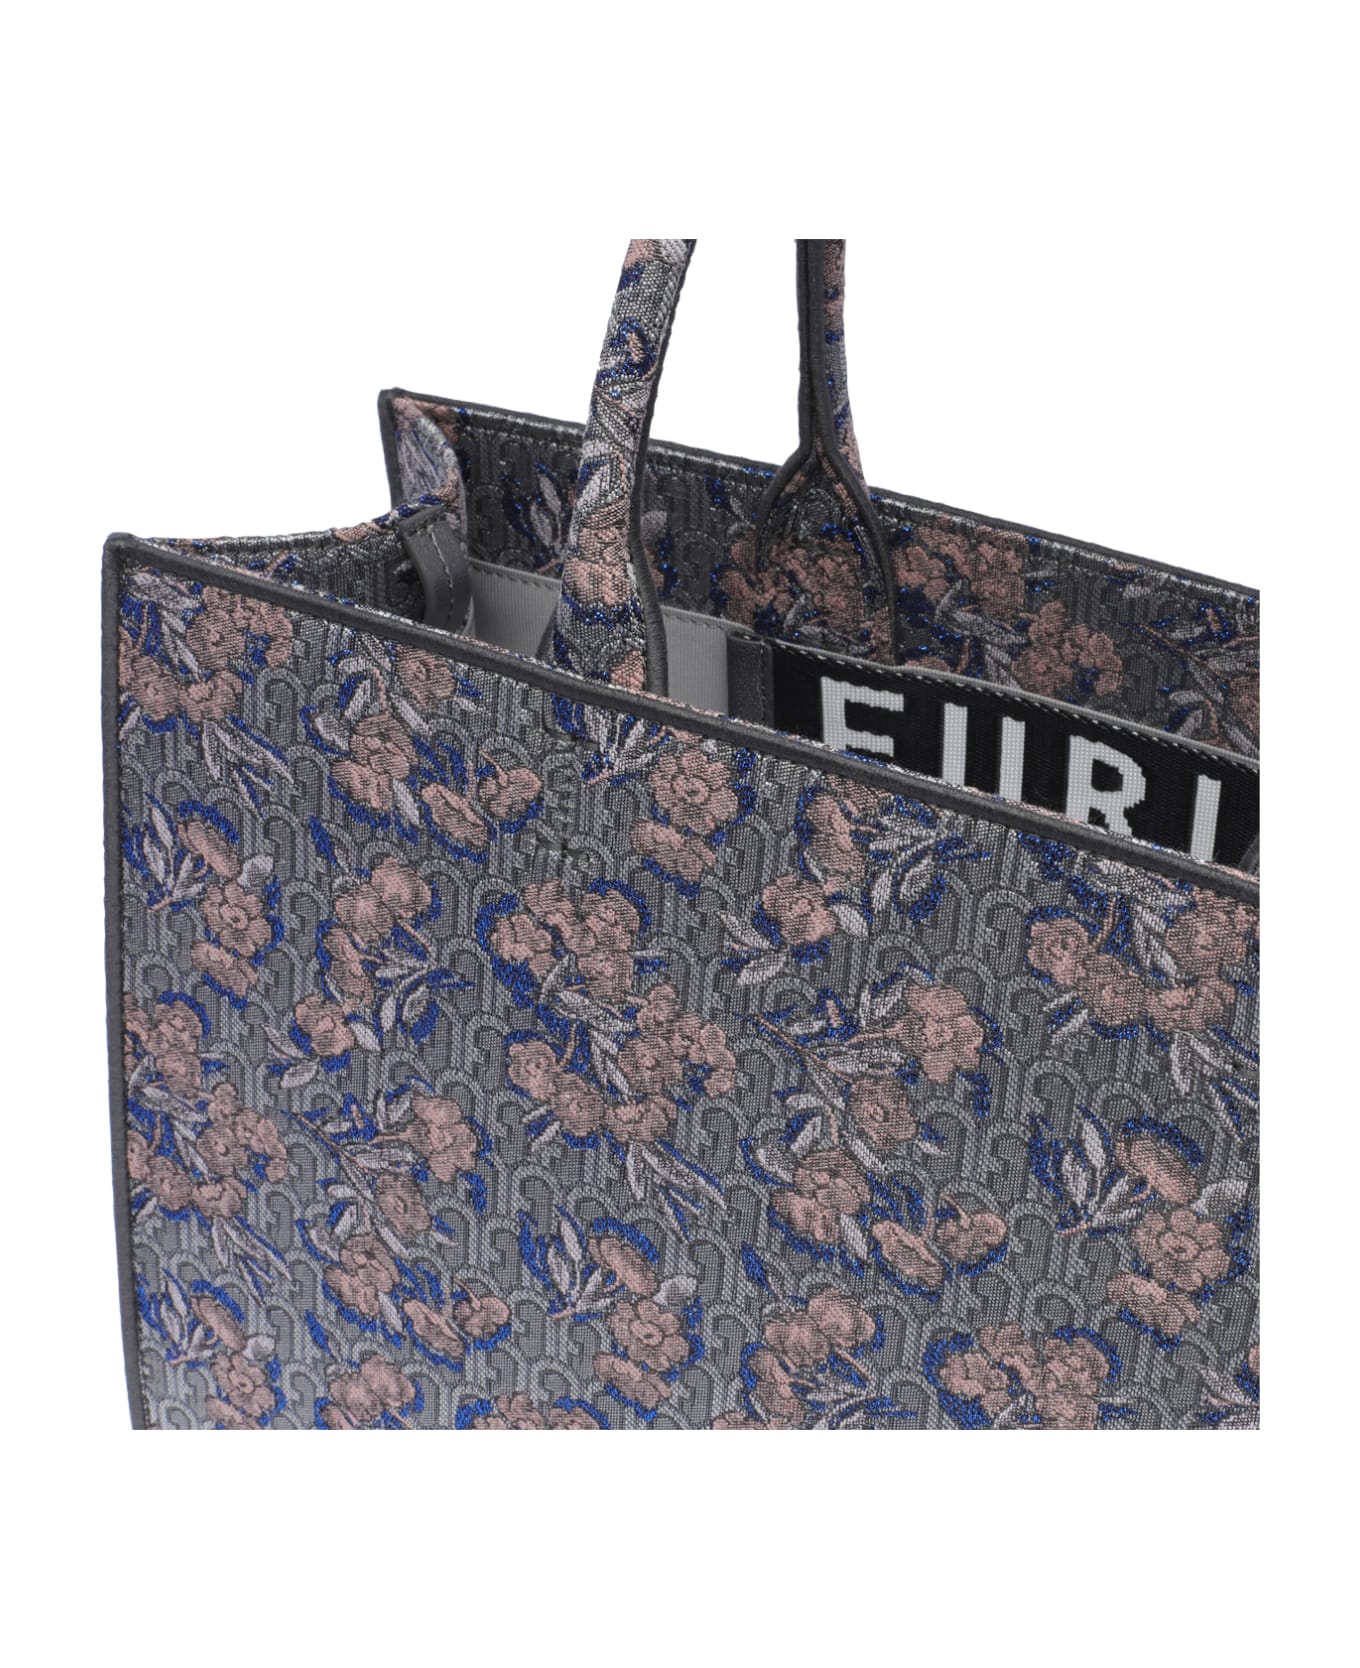 Furla Opportunity Shopping Bag - Toni Color Silver